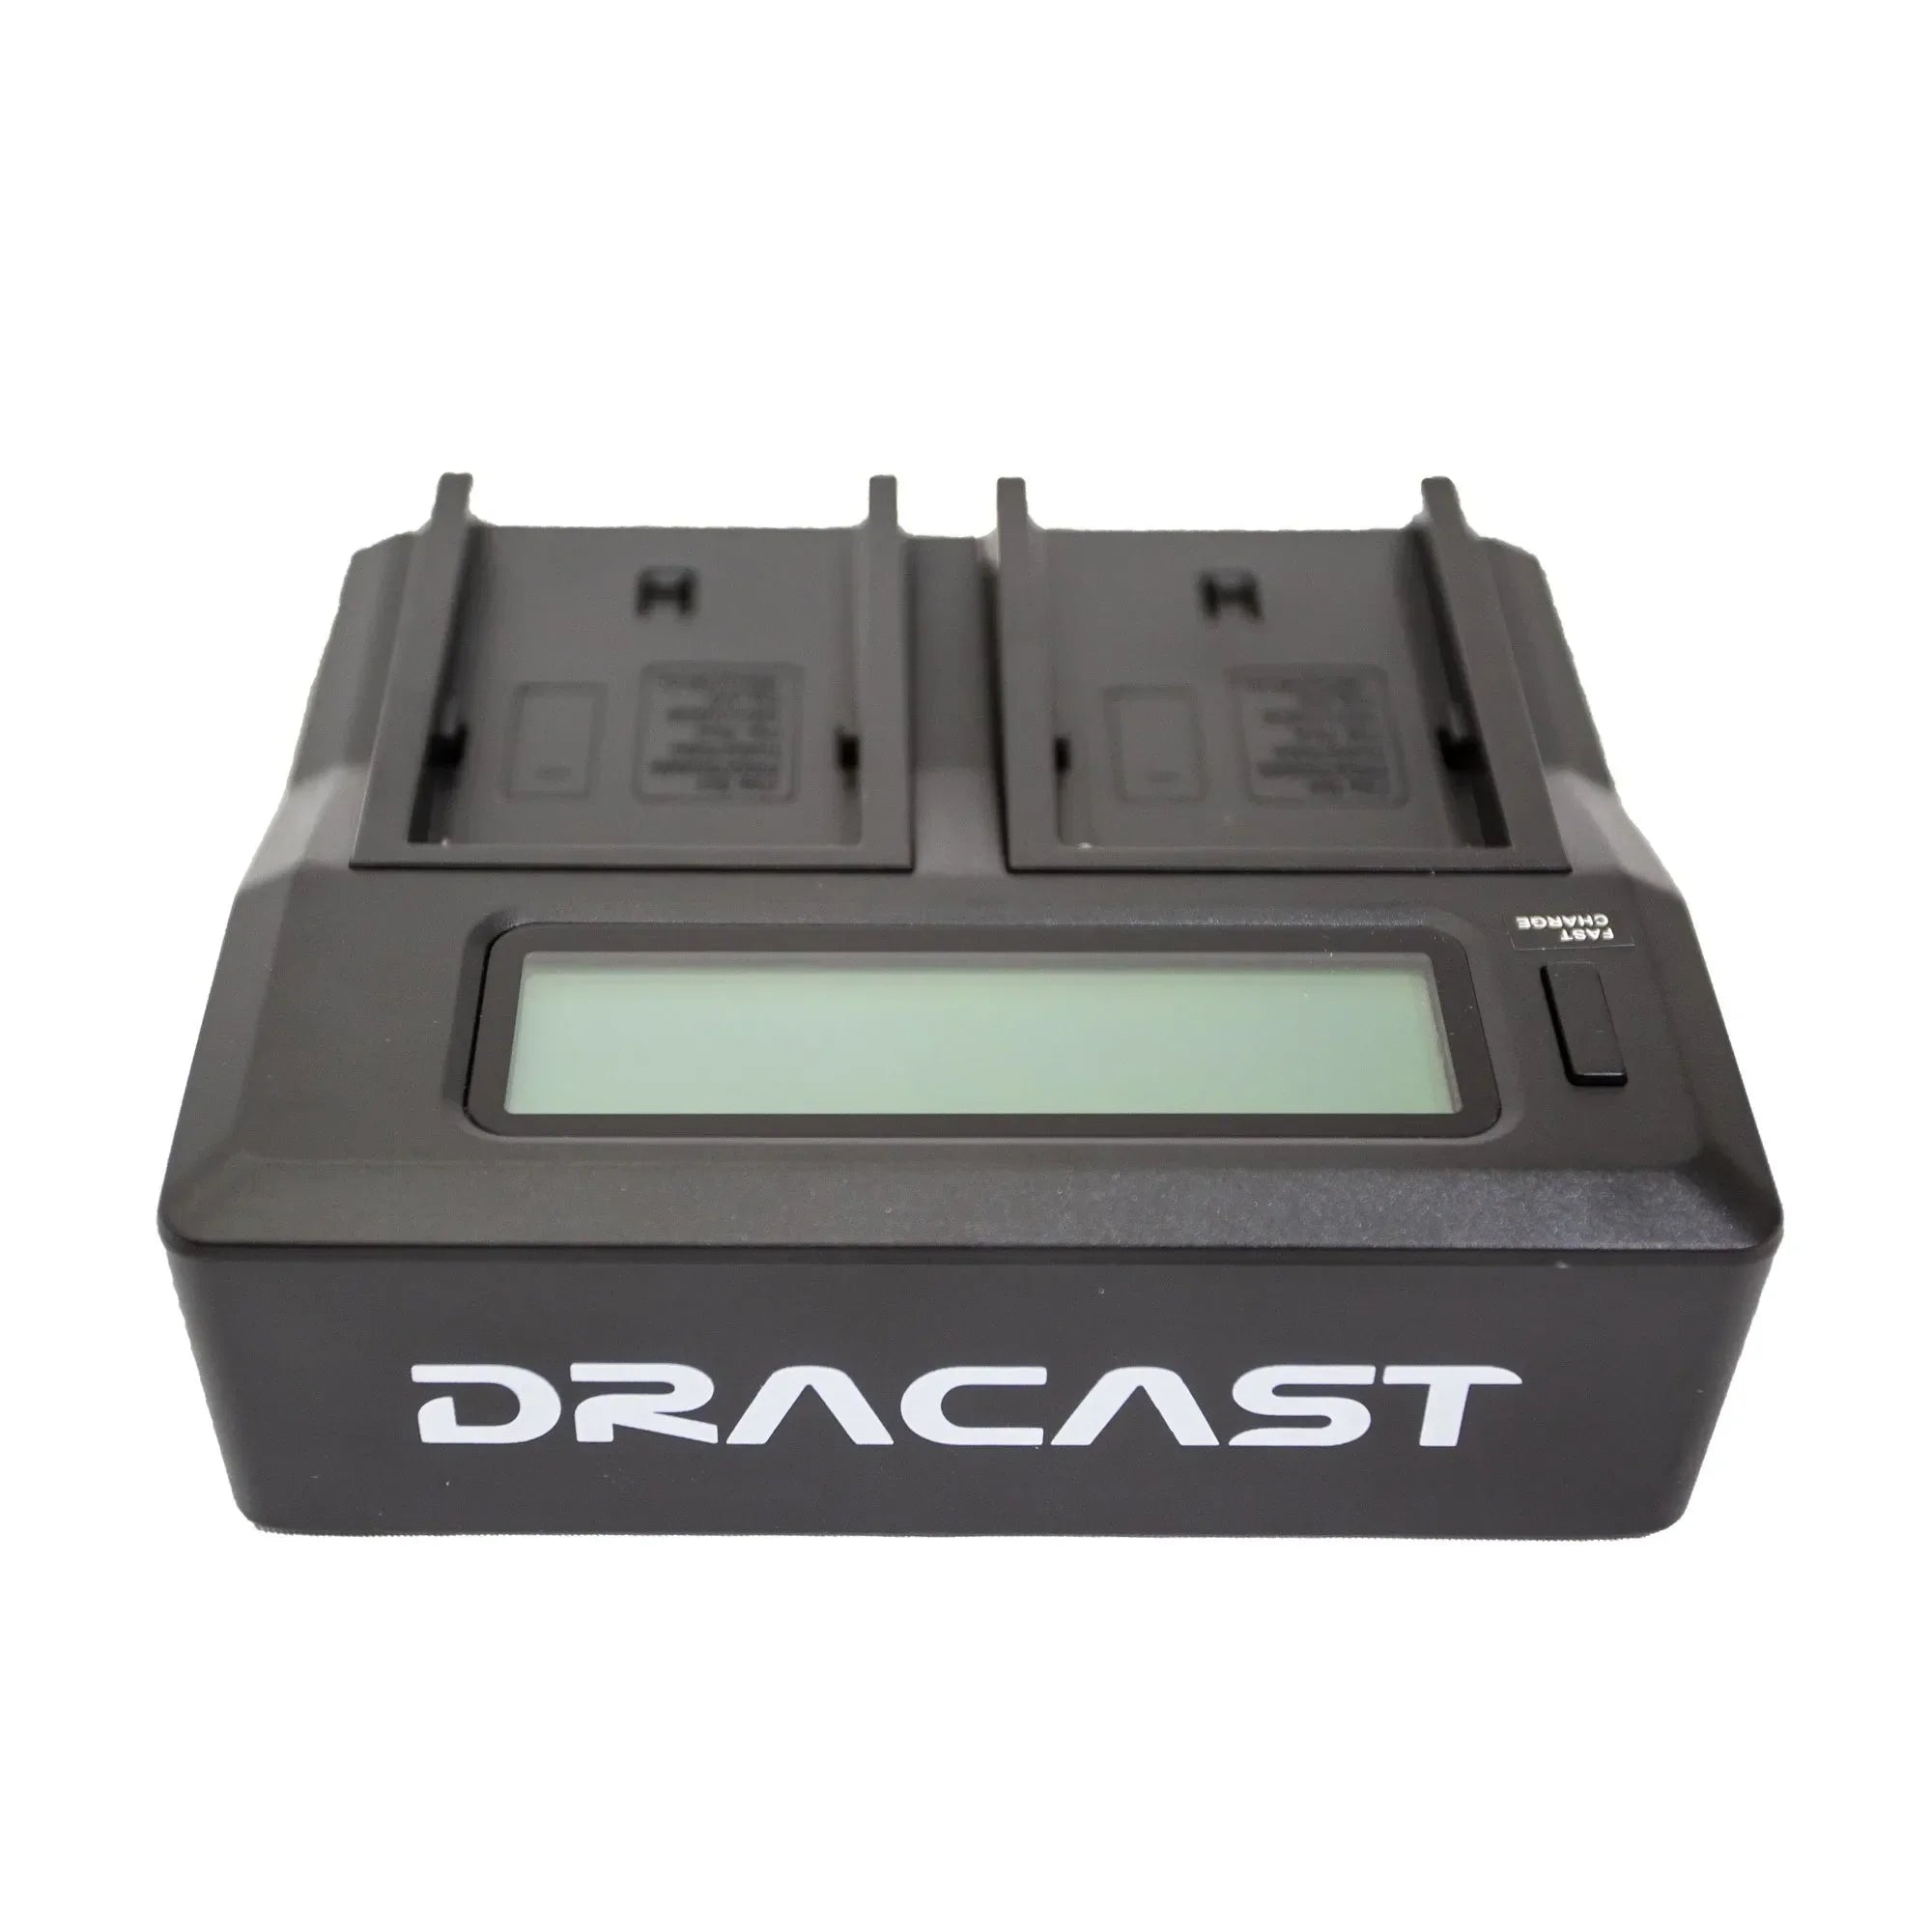 Dracast X Series LED Lighting Kit 4 (x1 DRX500RGB, x2 DRX1000RGB, x1 DRX240RGB, 8305F Travel Case)